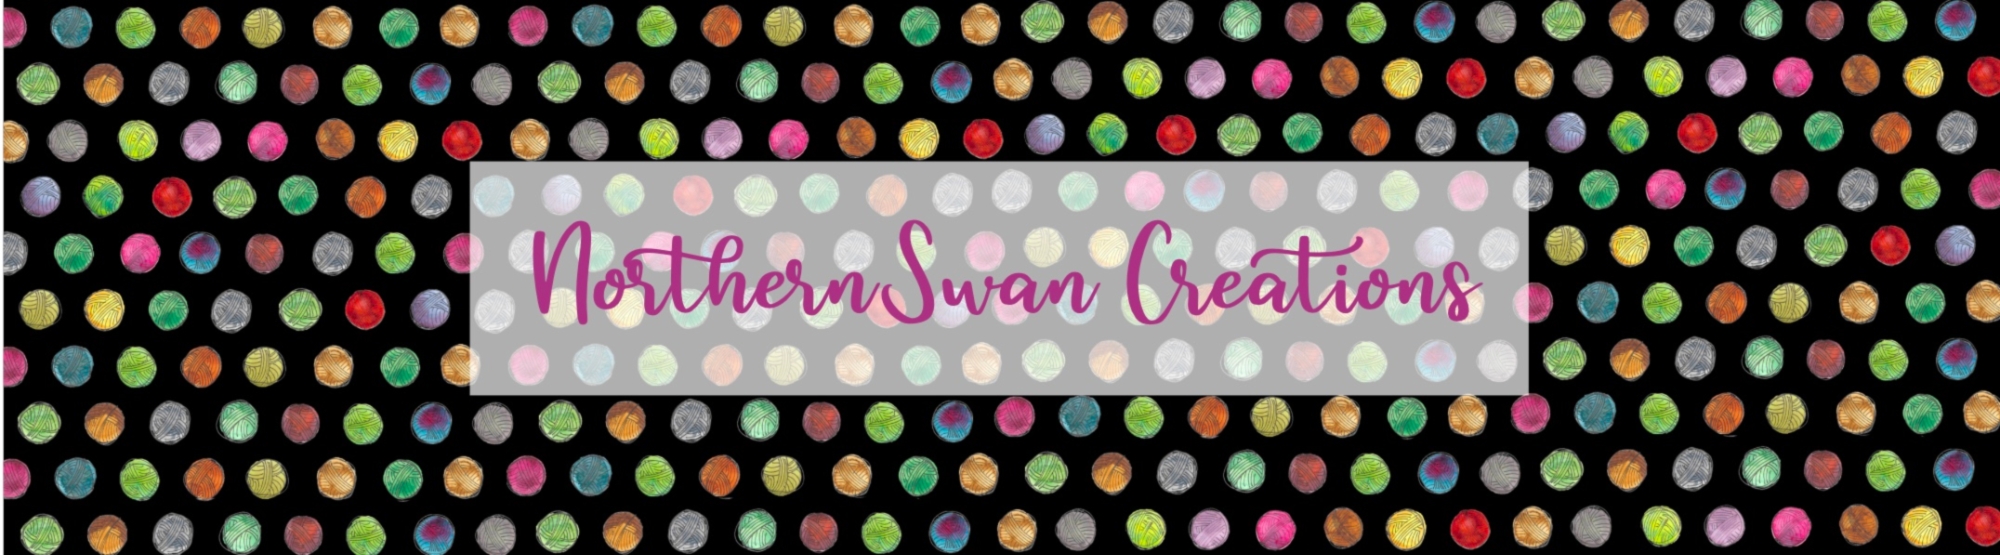 Showroom - Northern Swan Creations